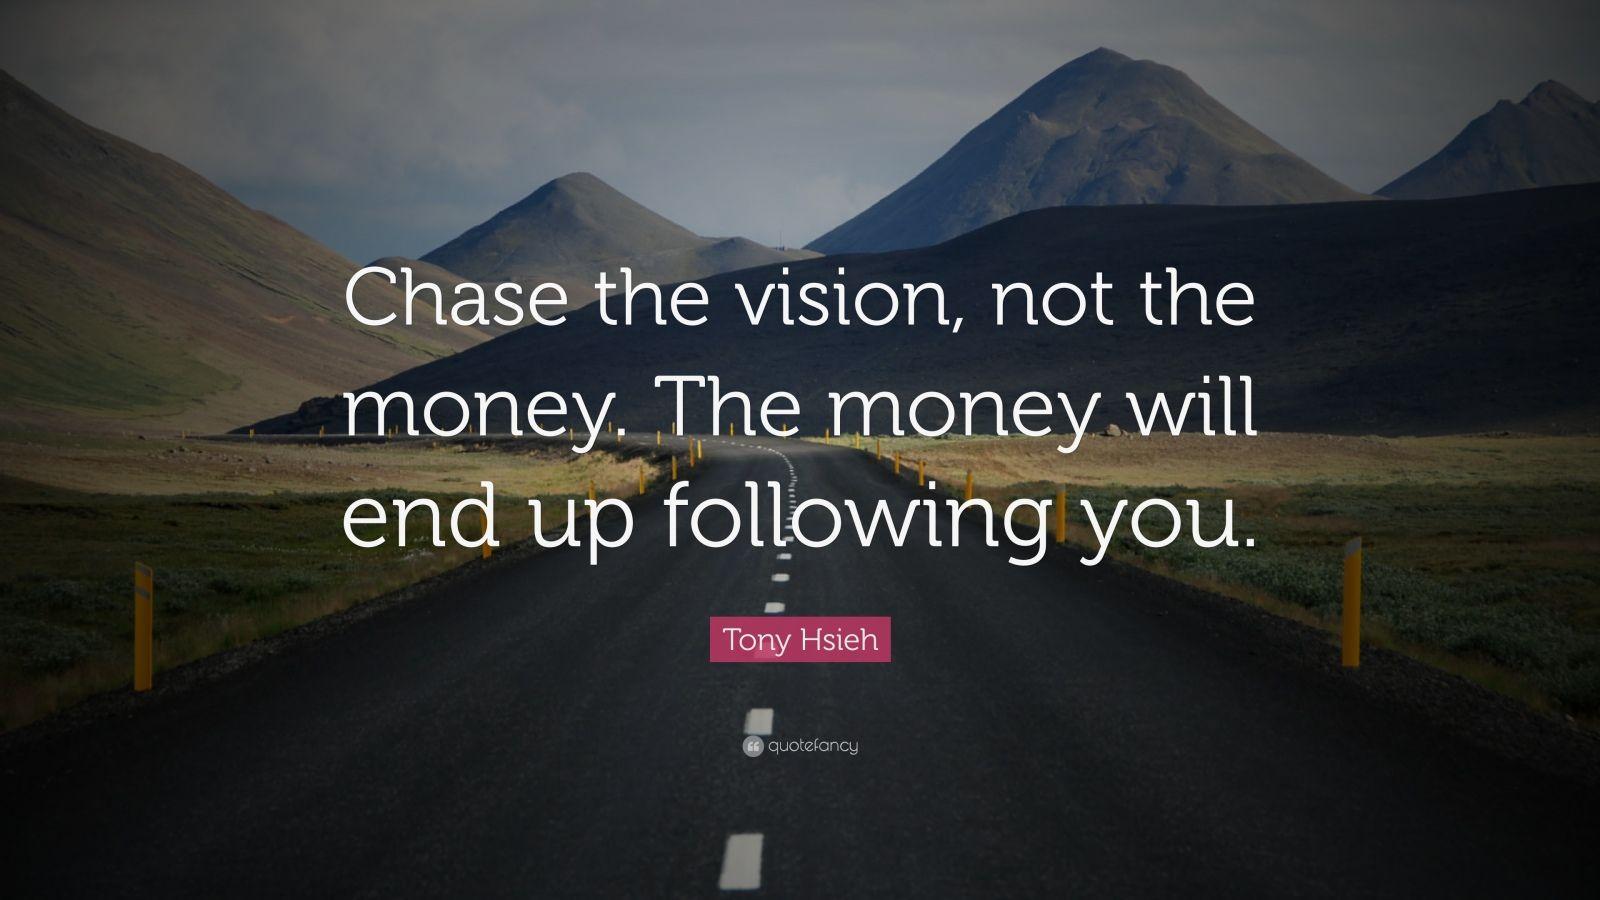 Chase the vision. Entrepreneurship Quotes. Tony